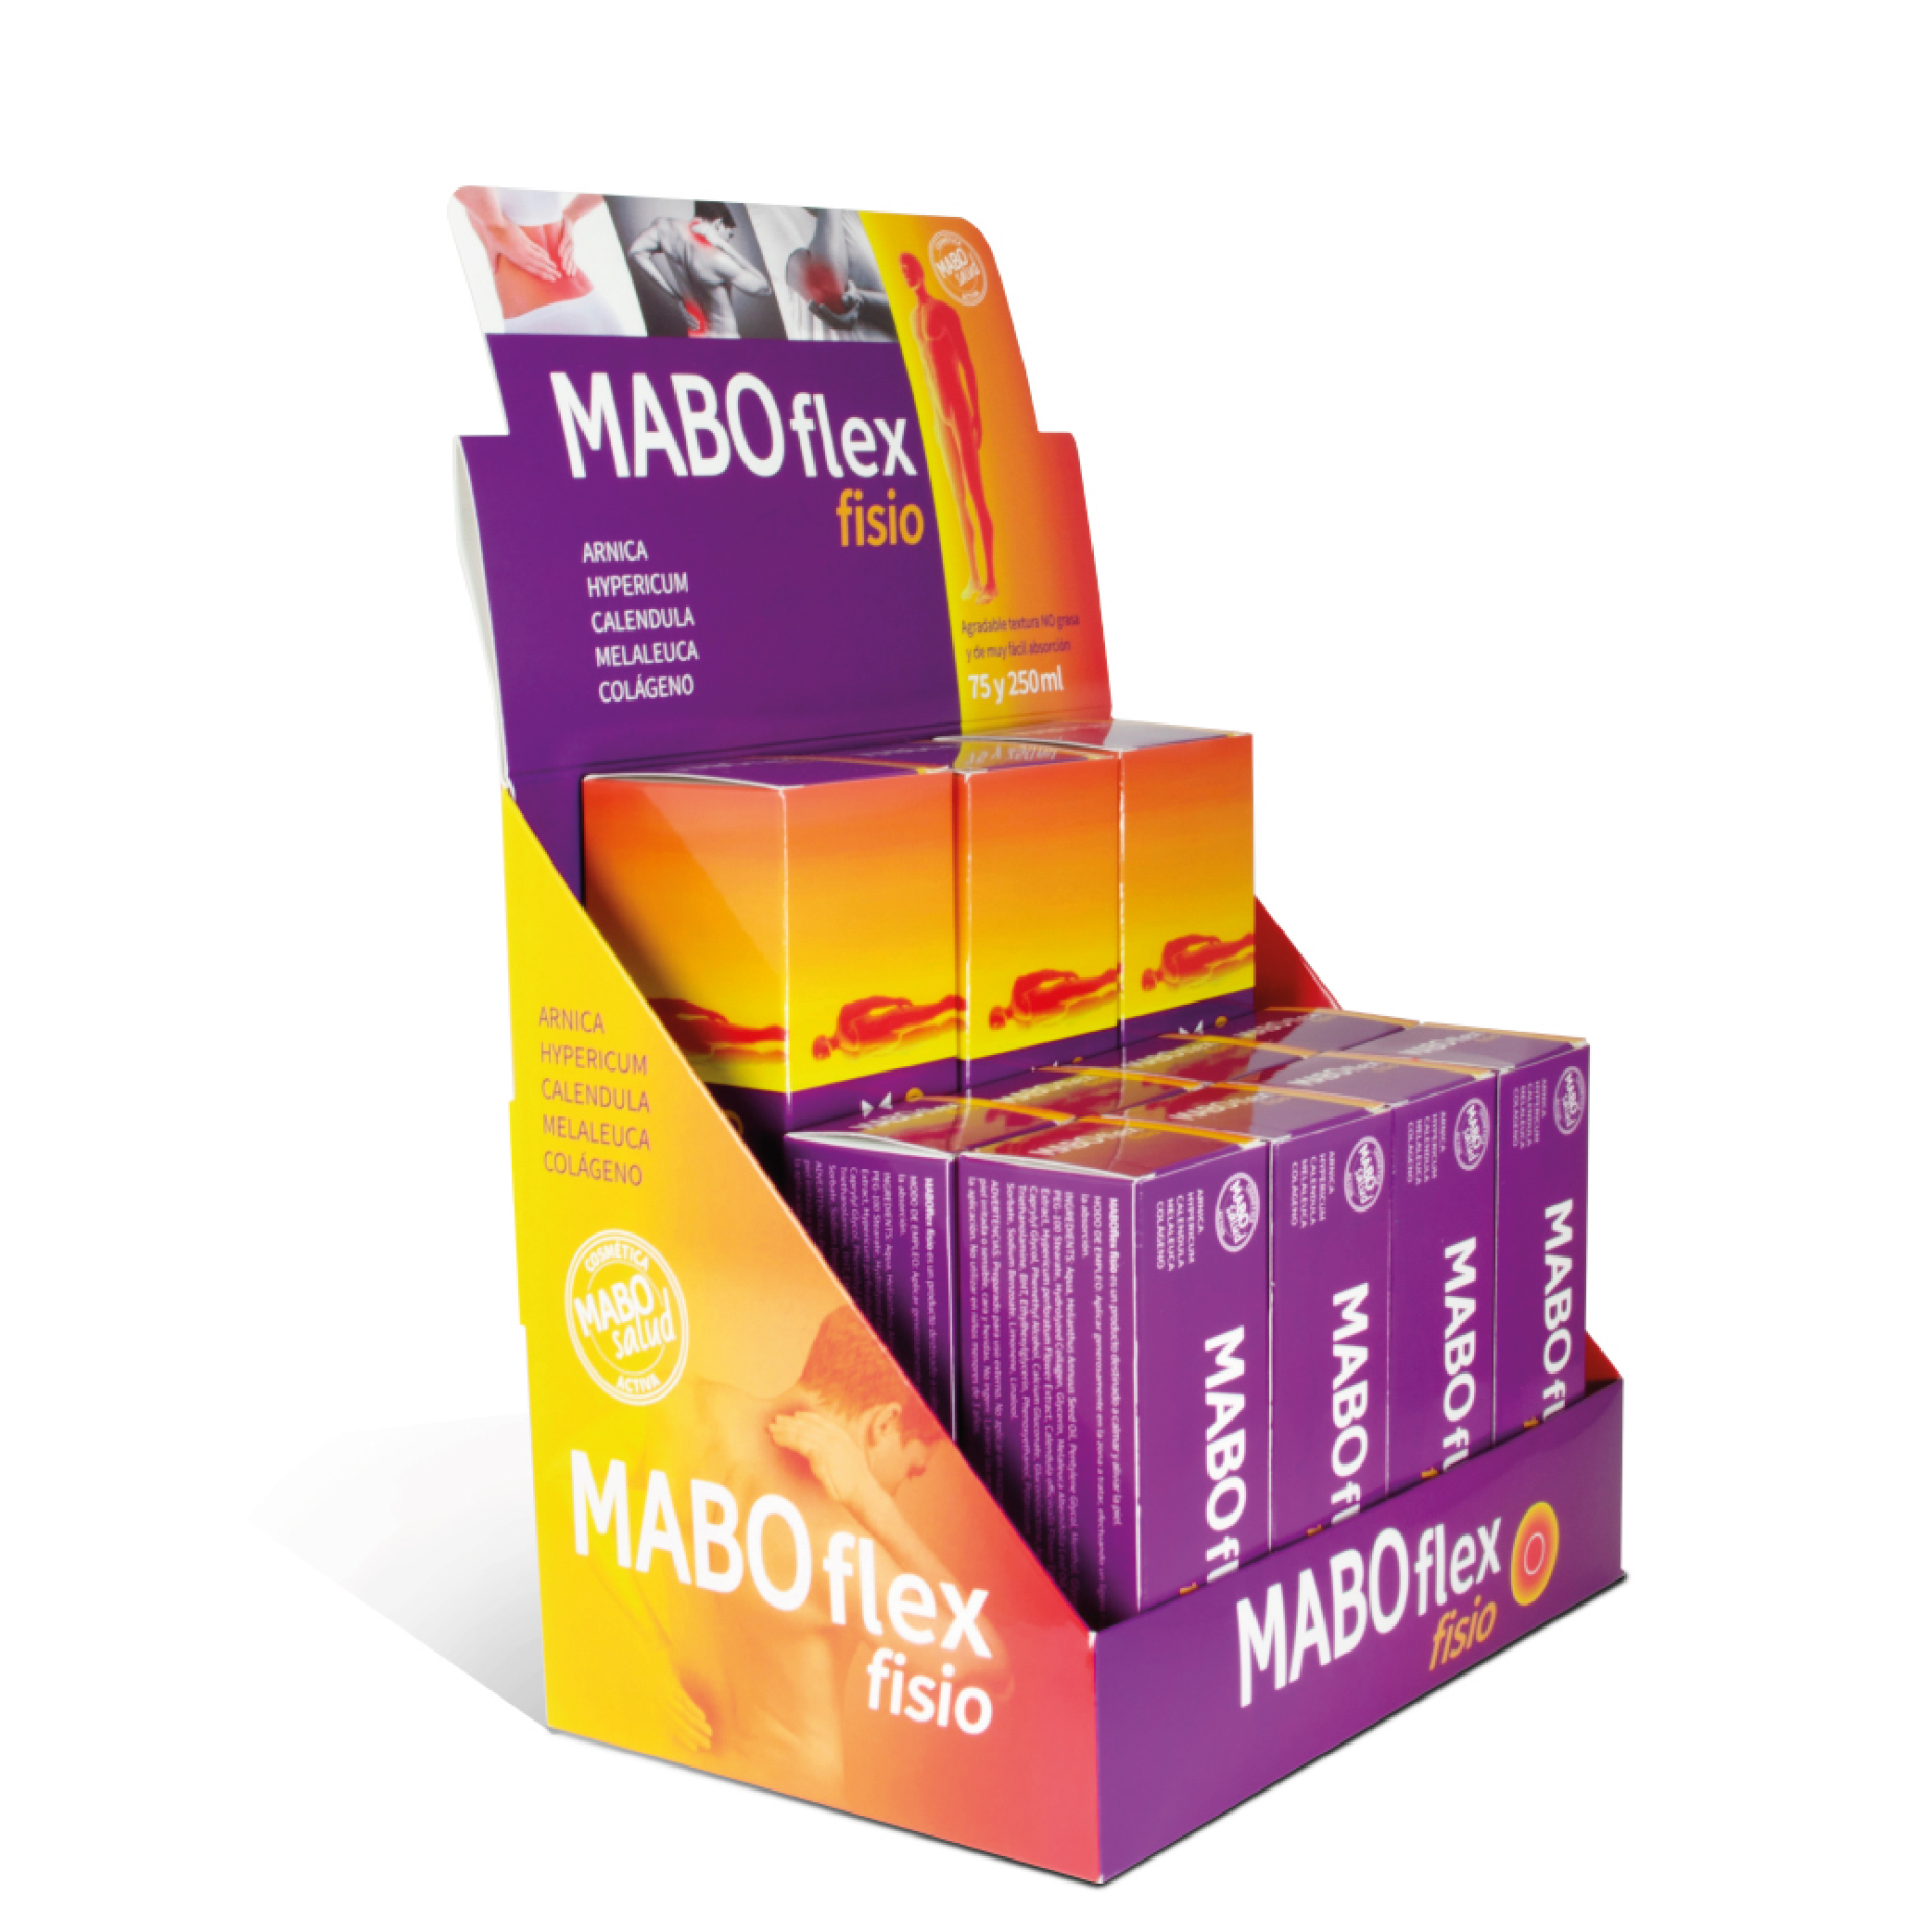 maboflex_packaging